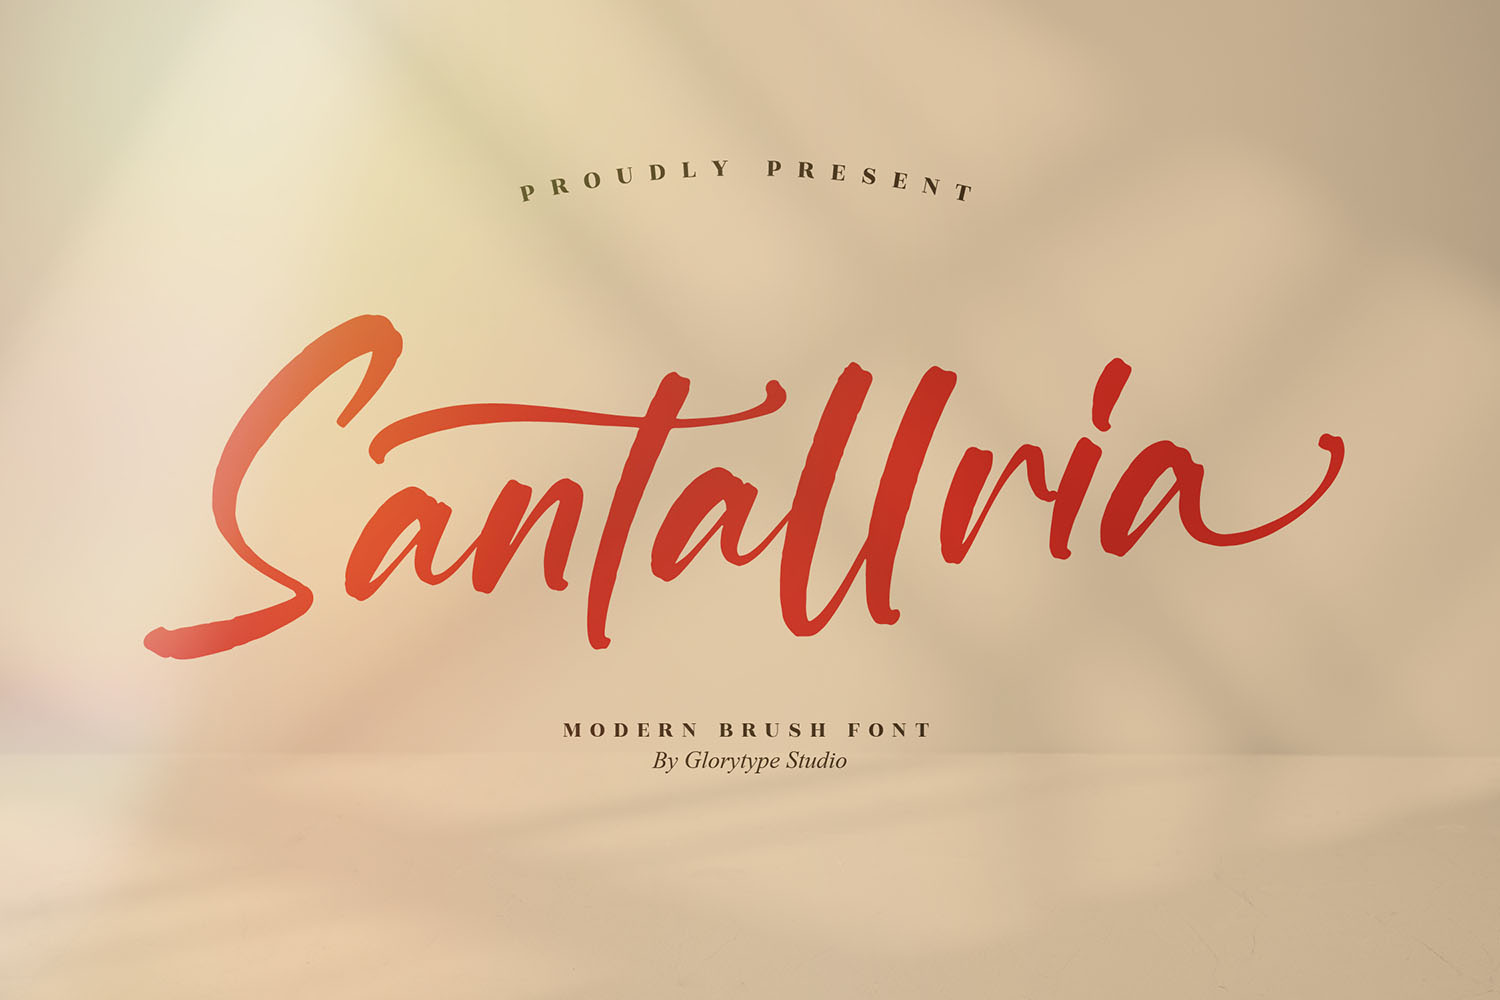 Santallria Free Font